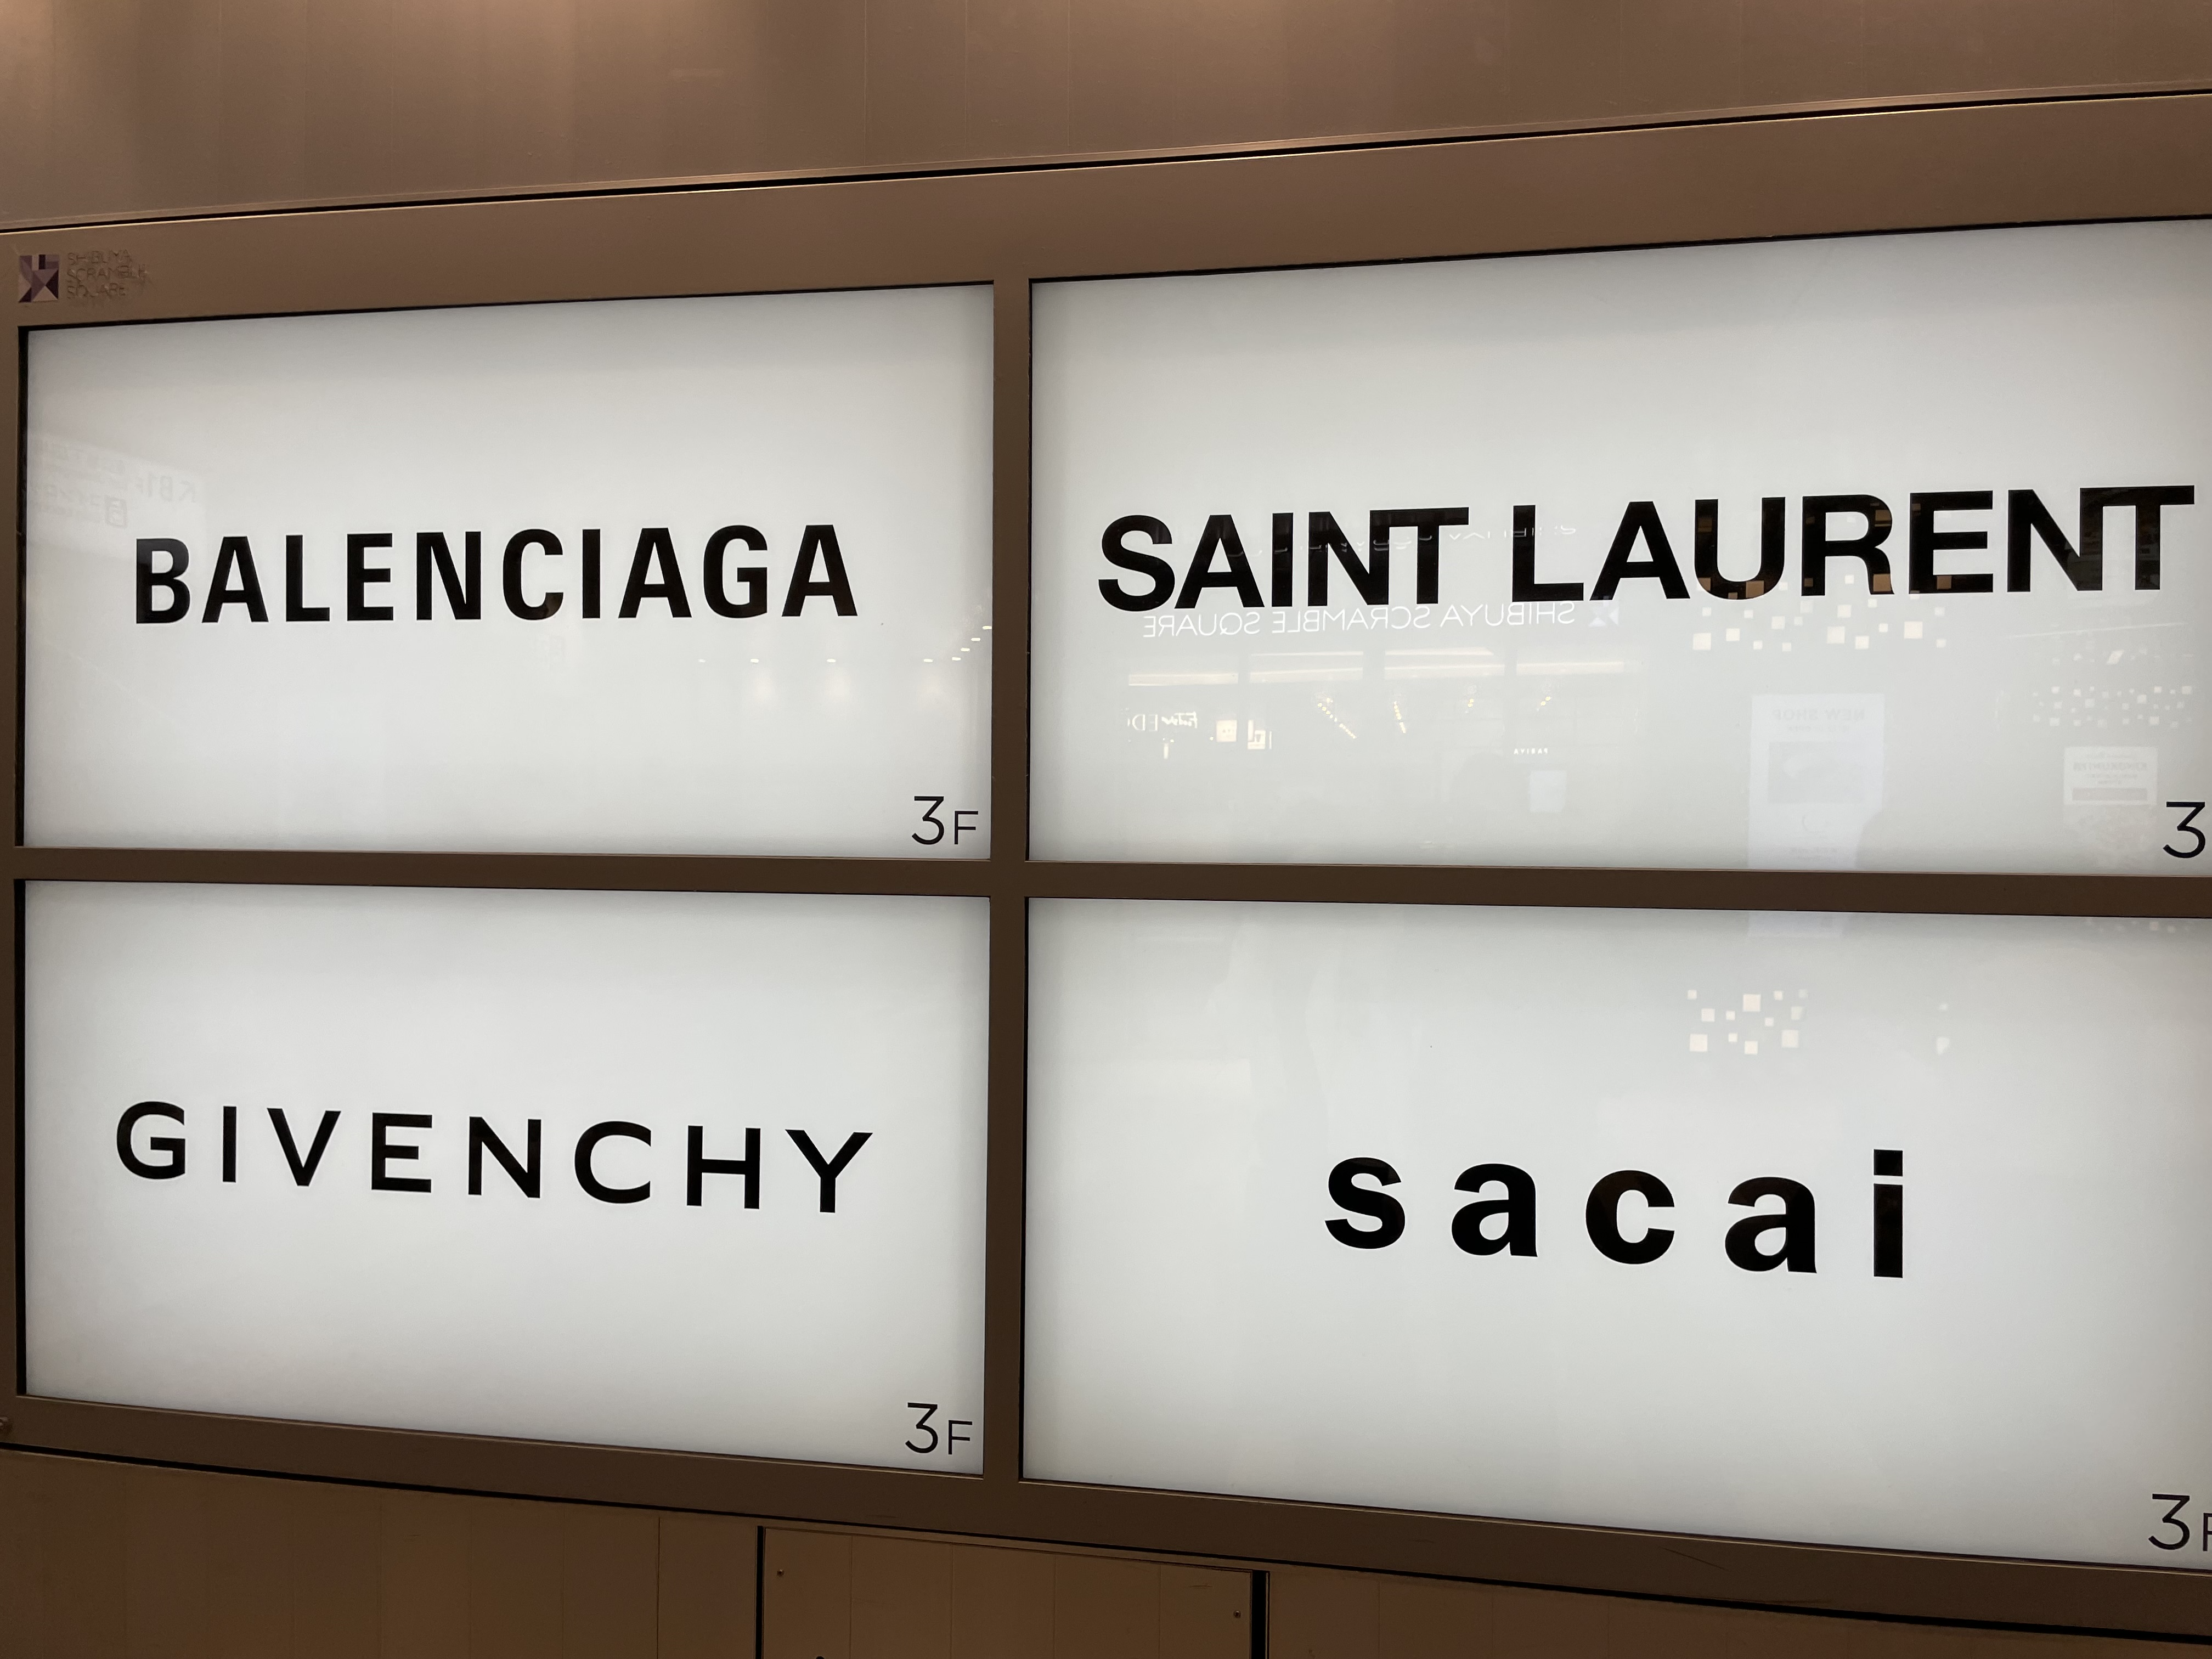 luxury department stores logos